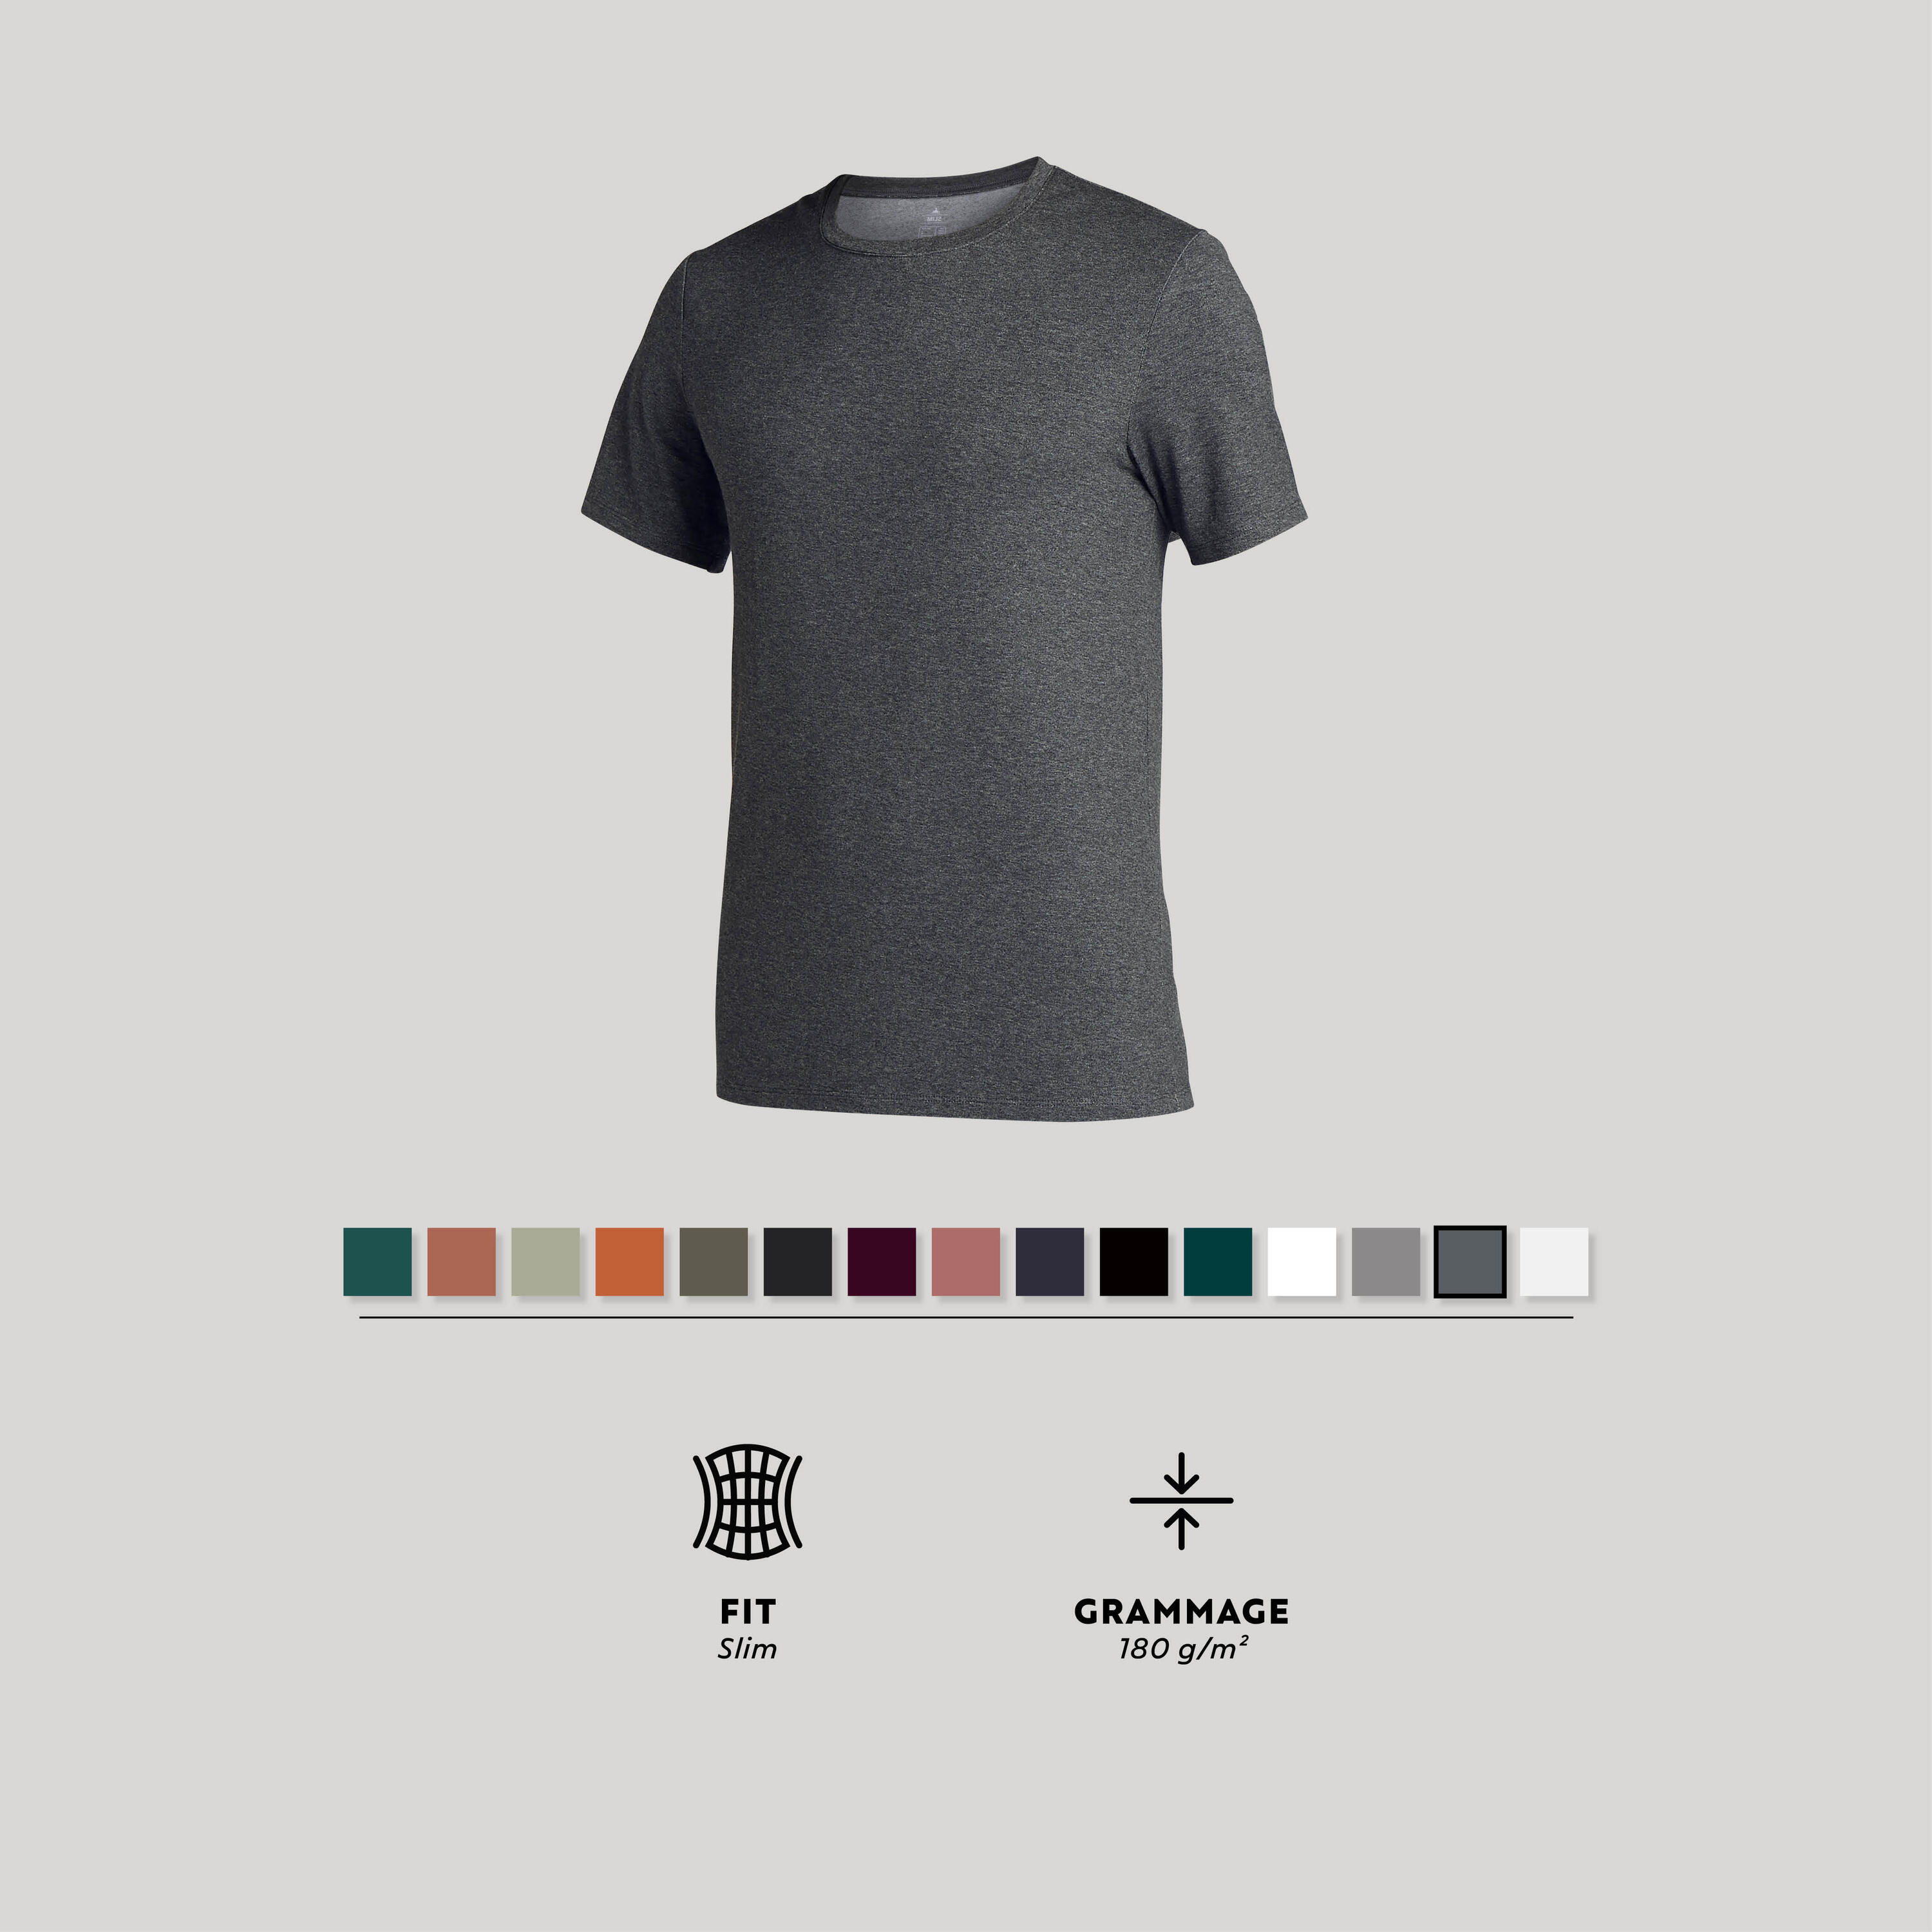 DOMYOS Men's Slim-Fit Fitness T-Shirt 500 - Dark Grey